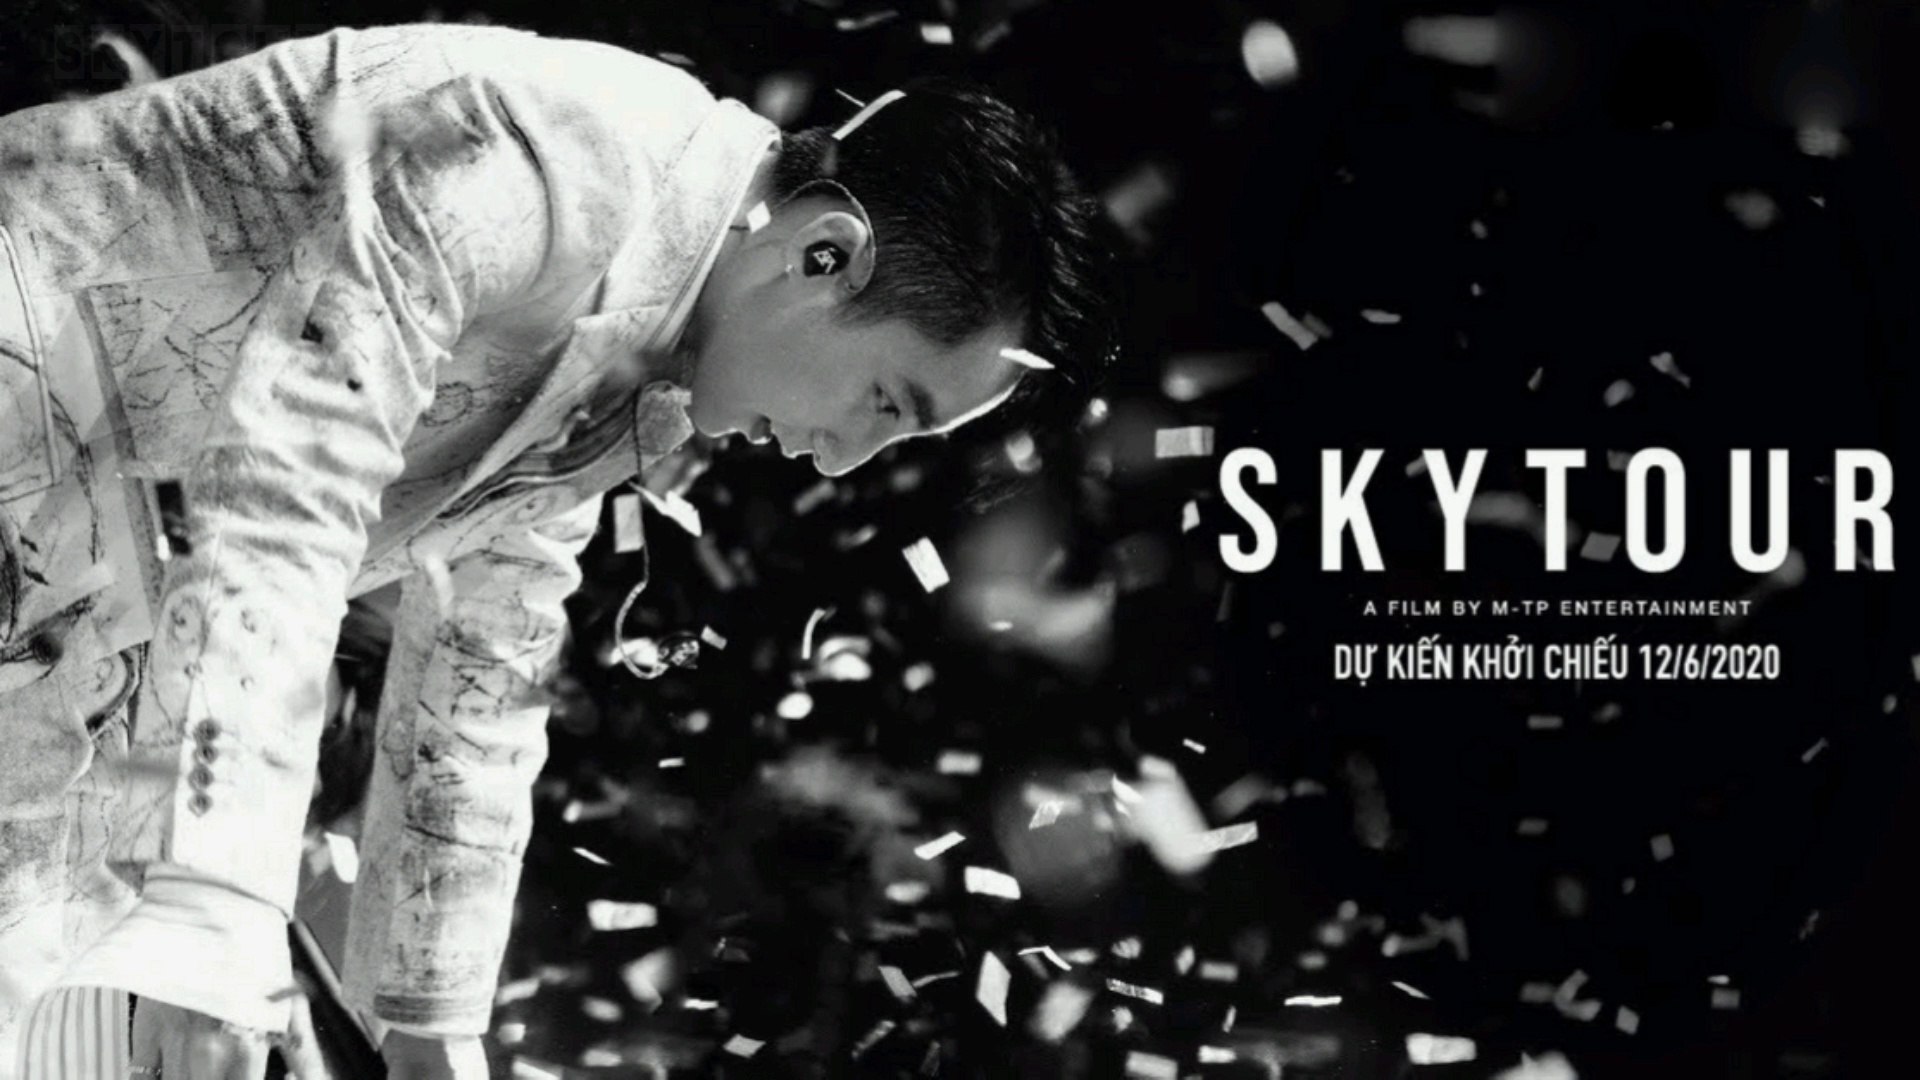 Xem Phim Sky Tour, Sơn Tùng M-TP. Sky Tour Movie 2020